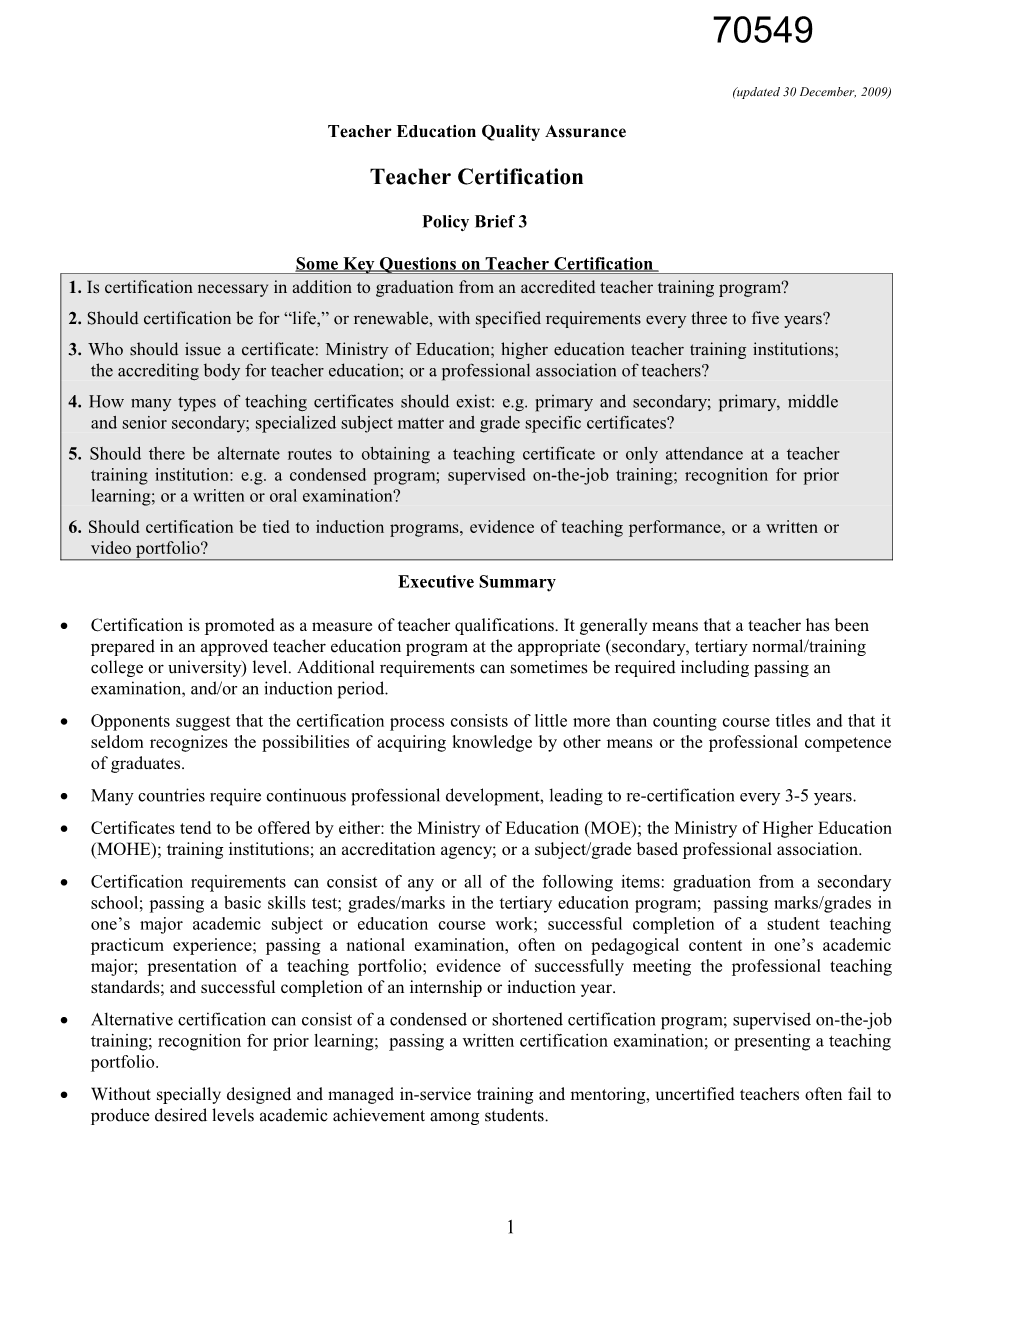 Teacher Education Quality Assurance